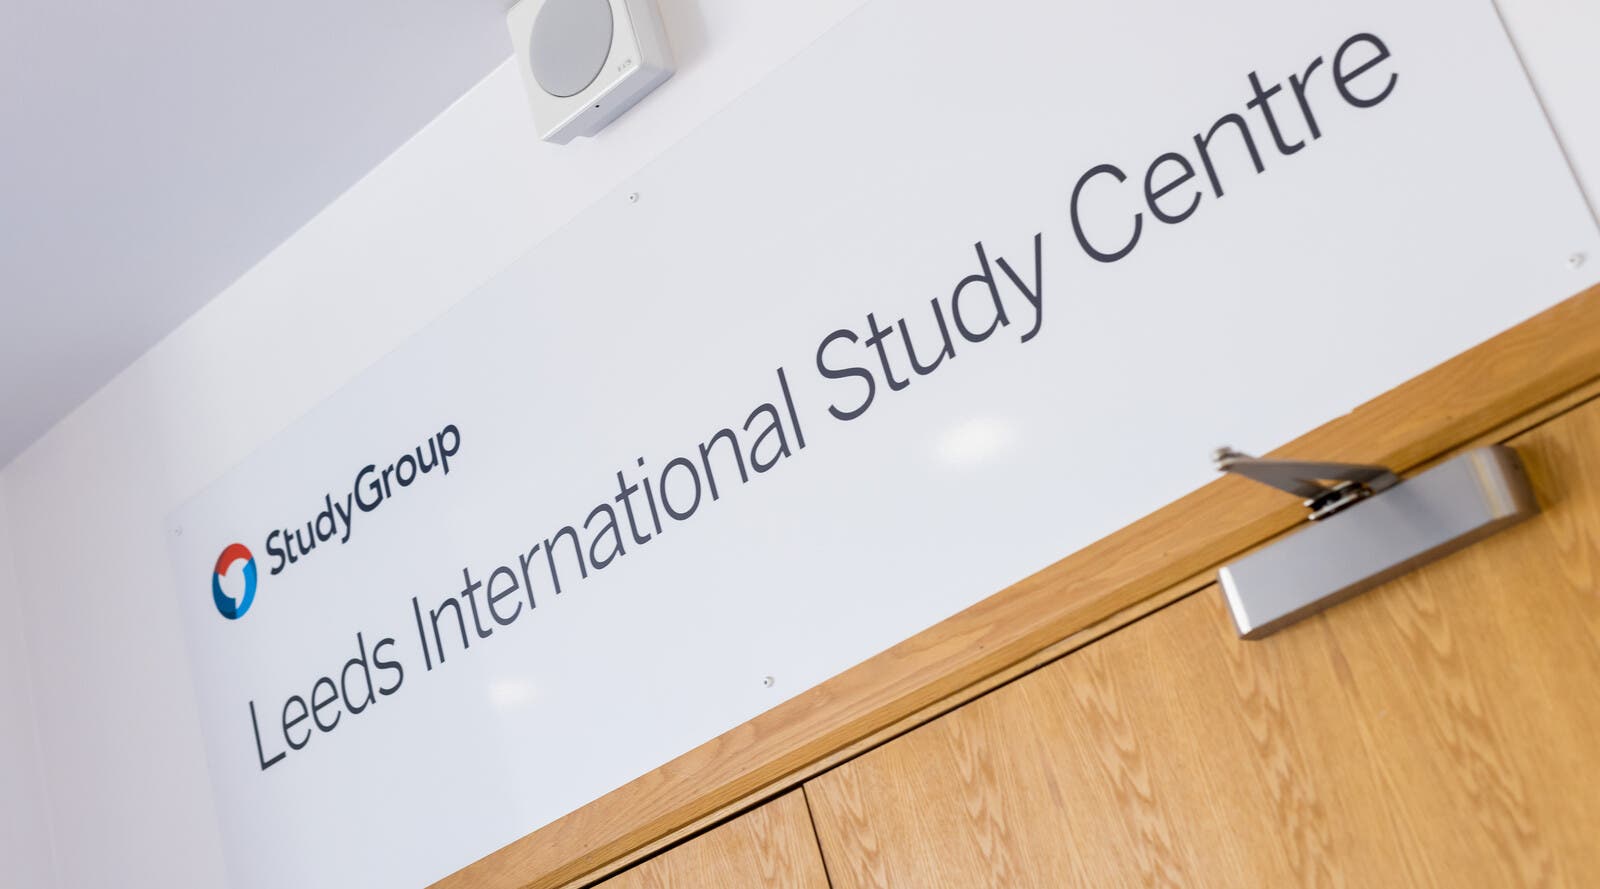 The Leeds International Study Centre sign